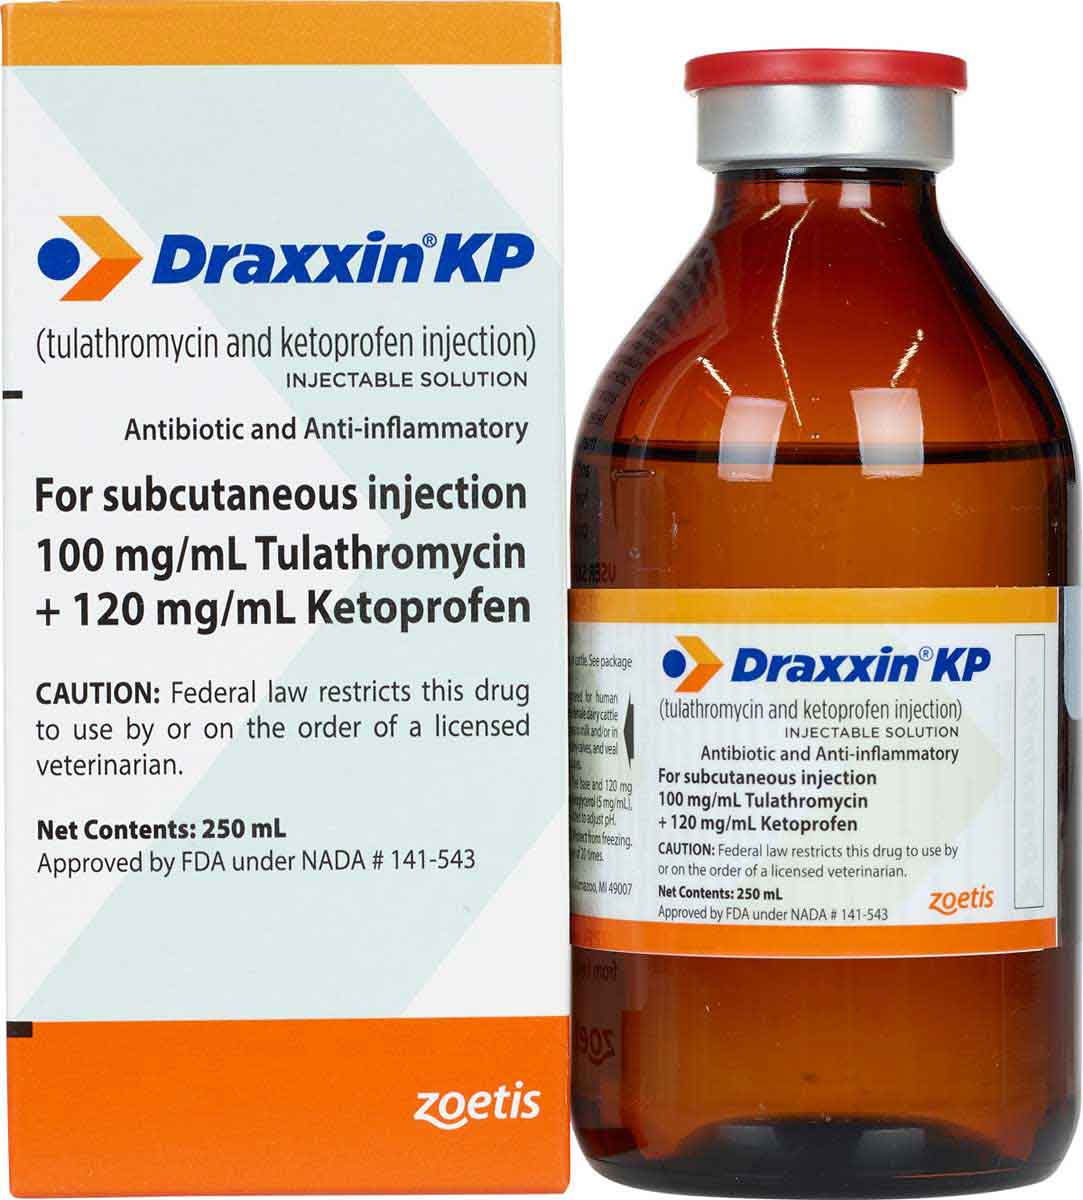 Draxxin KP Zoetis Animal Health Safe Pharmacy Antibiotics Livestock 